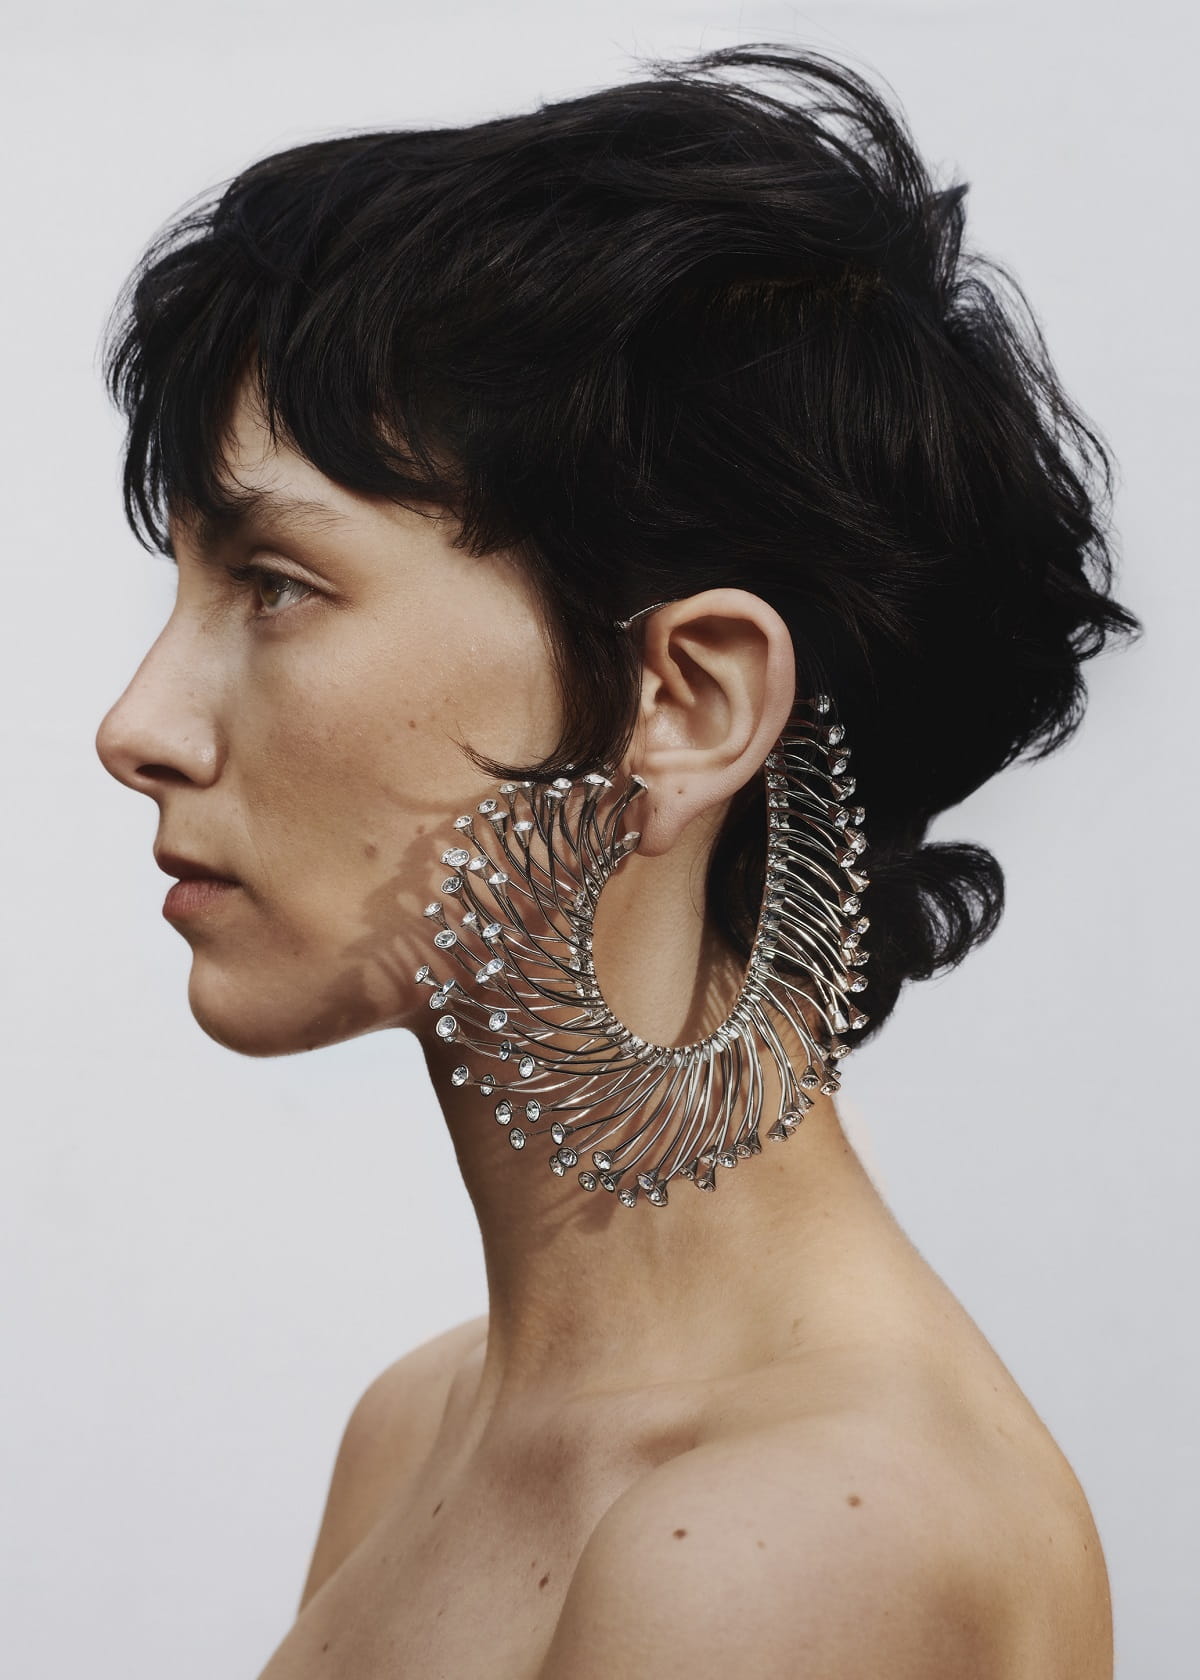 Vera Massias by Arnaud Lajeunie for Mugler Fall 2018 Jewelry - Casey Cadwallader